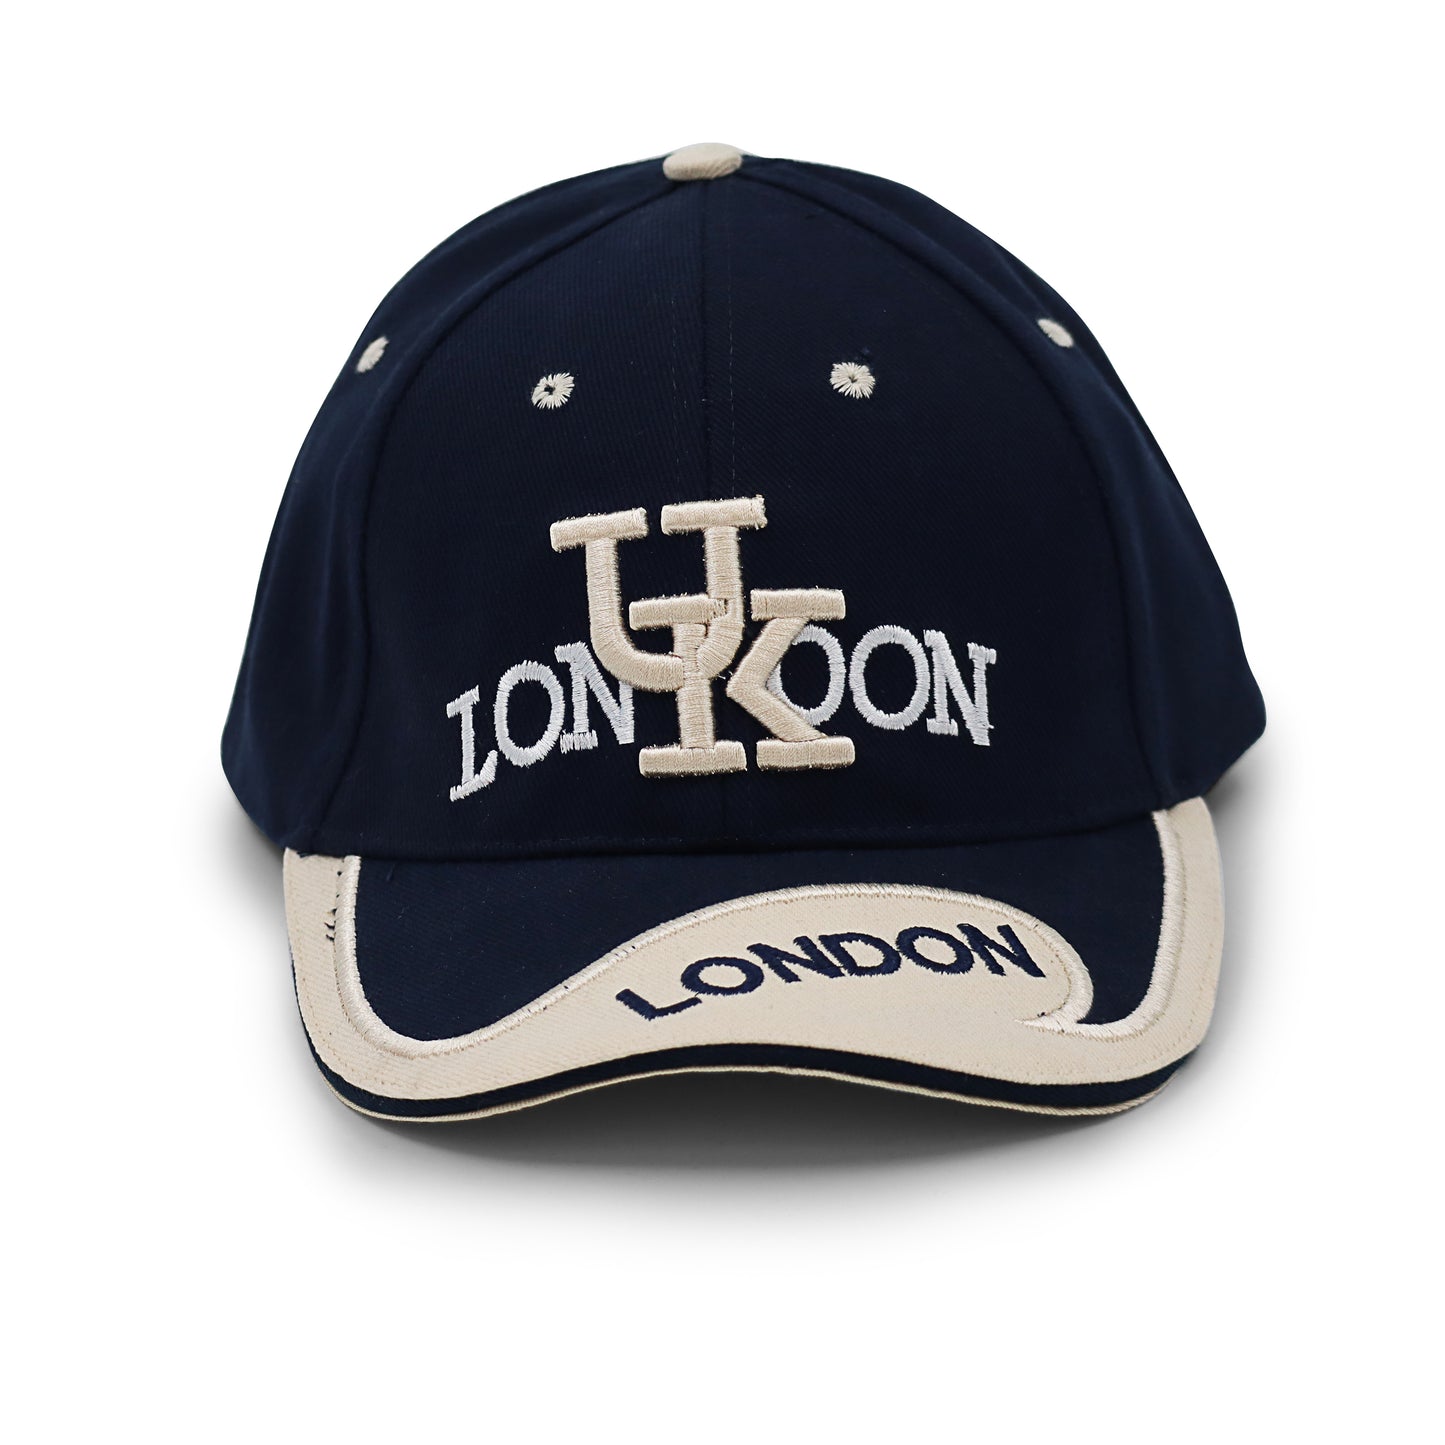 London Souvenir UK Cap